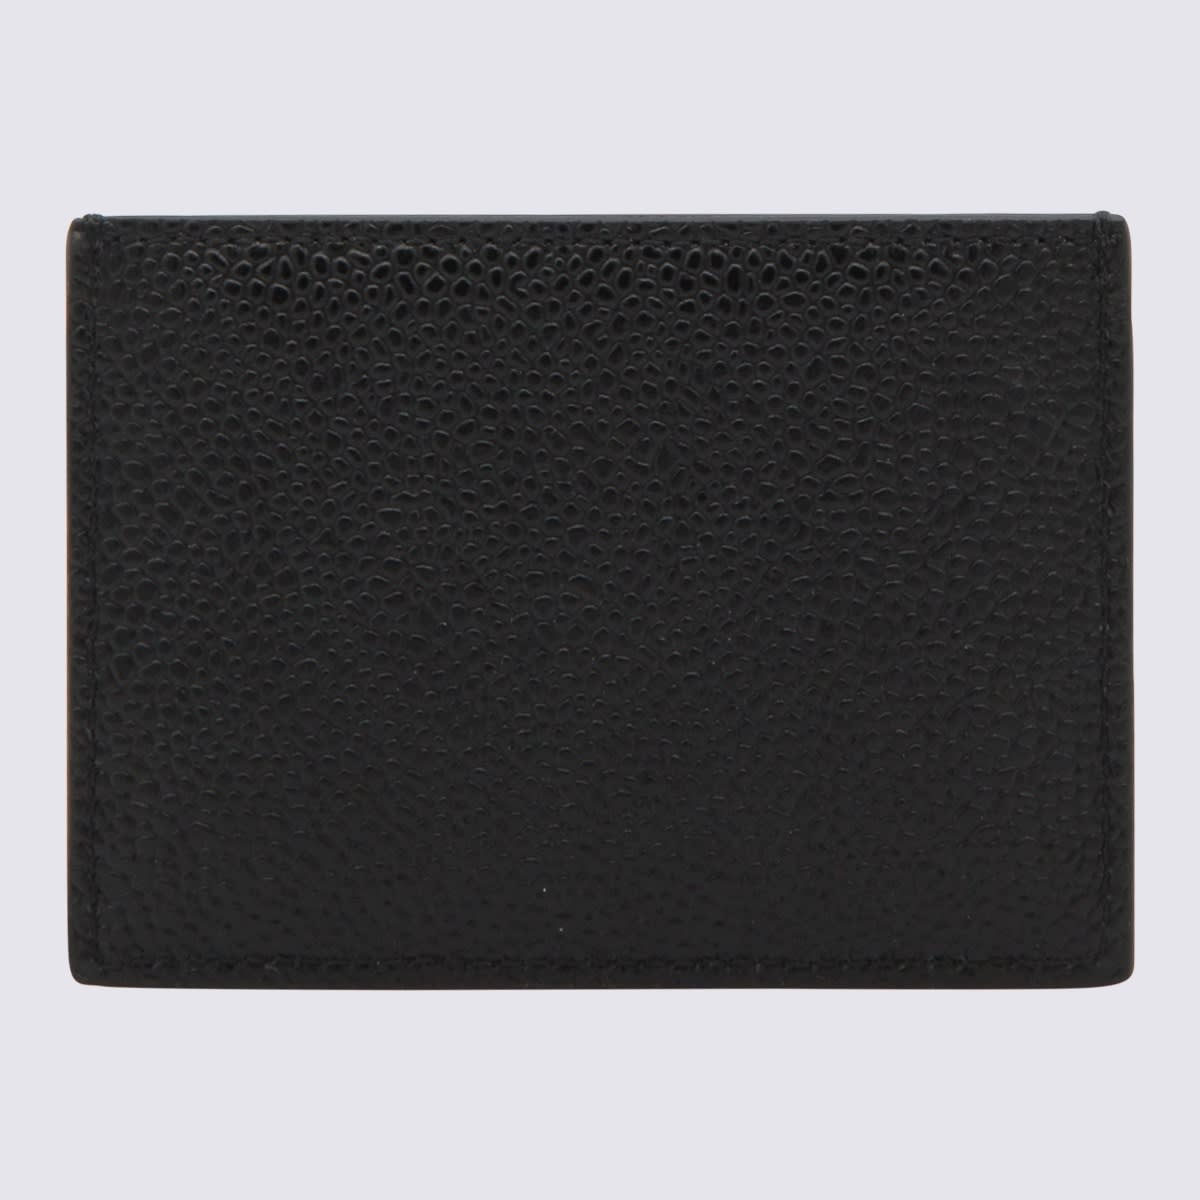 Shop Thom Browne Black Leather Pebble Card Holder